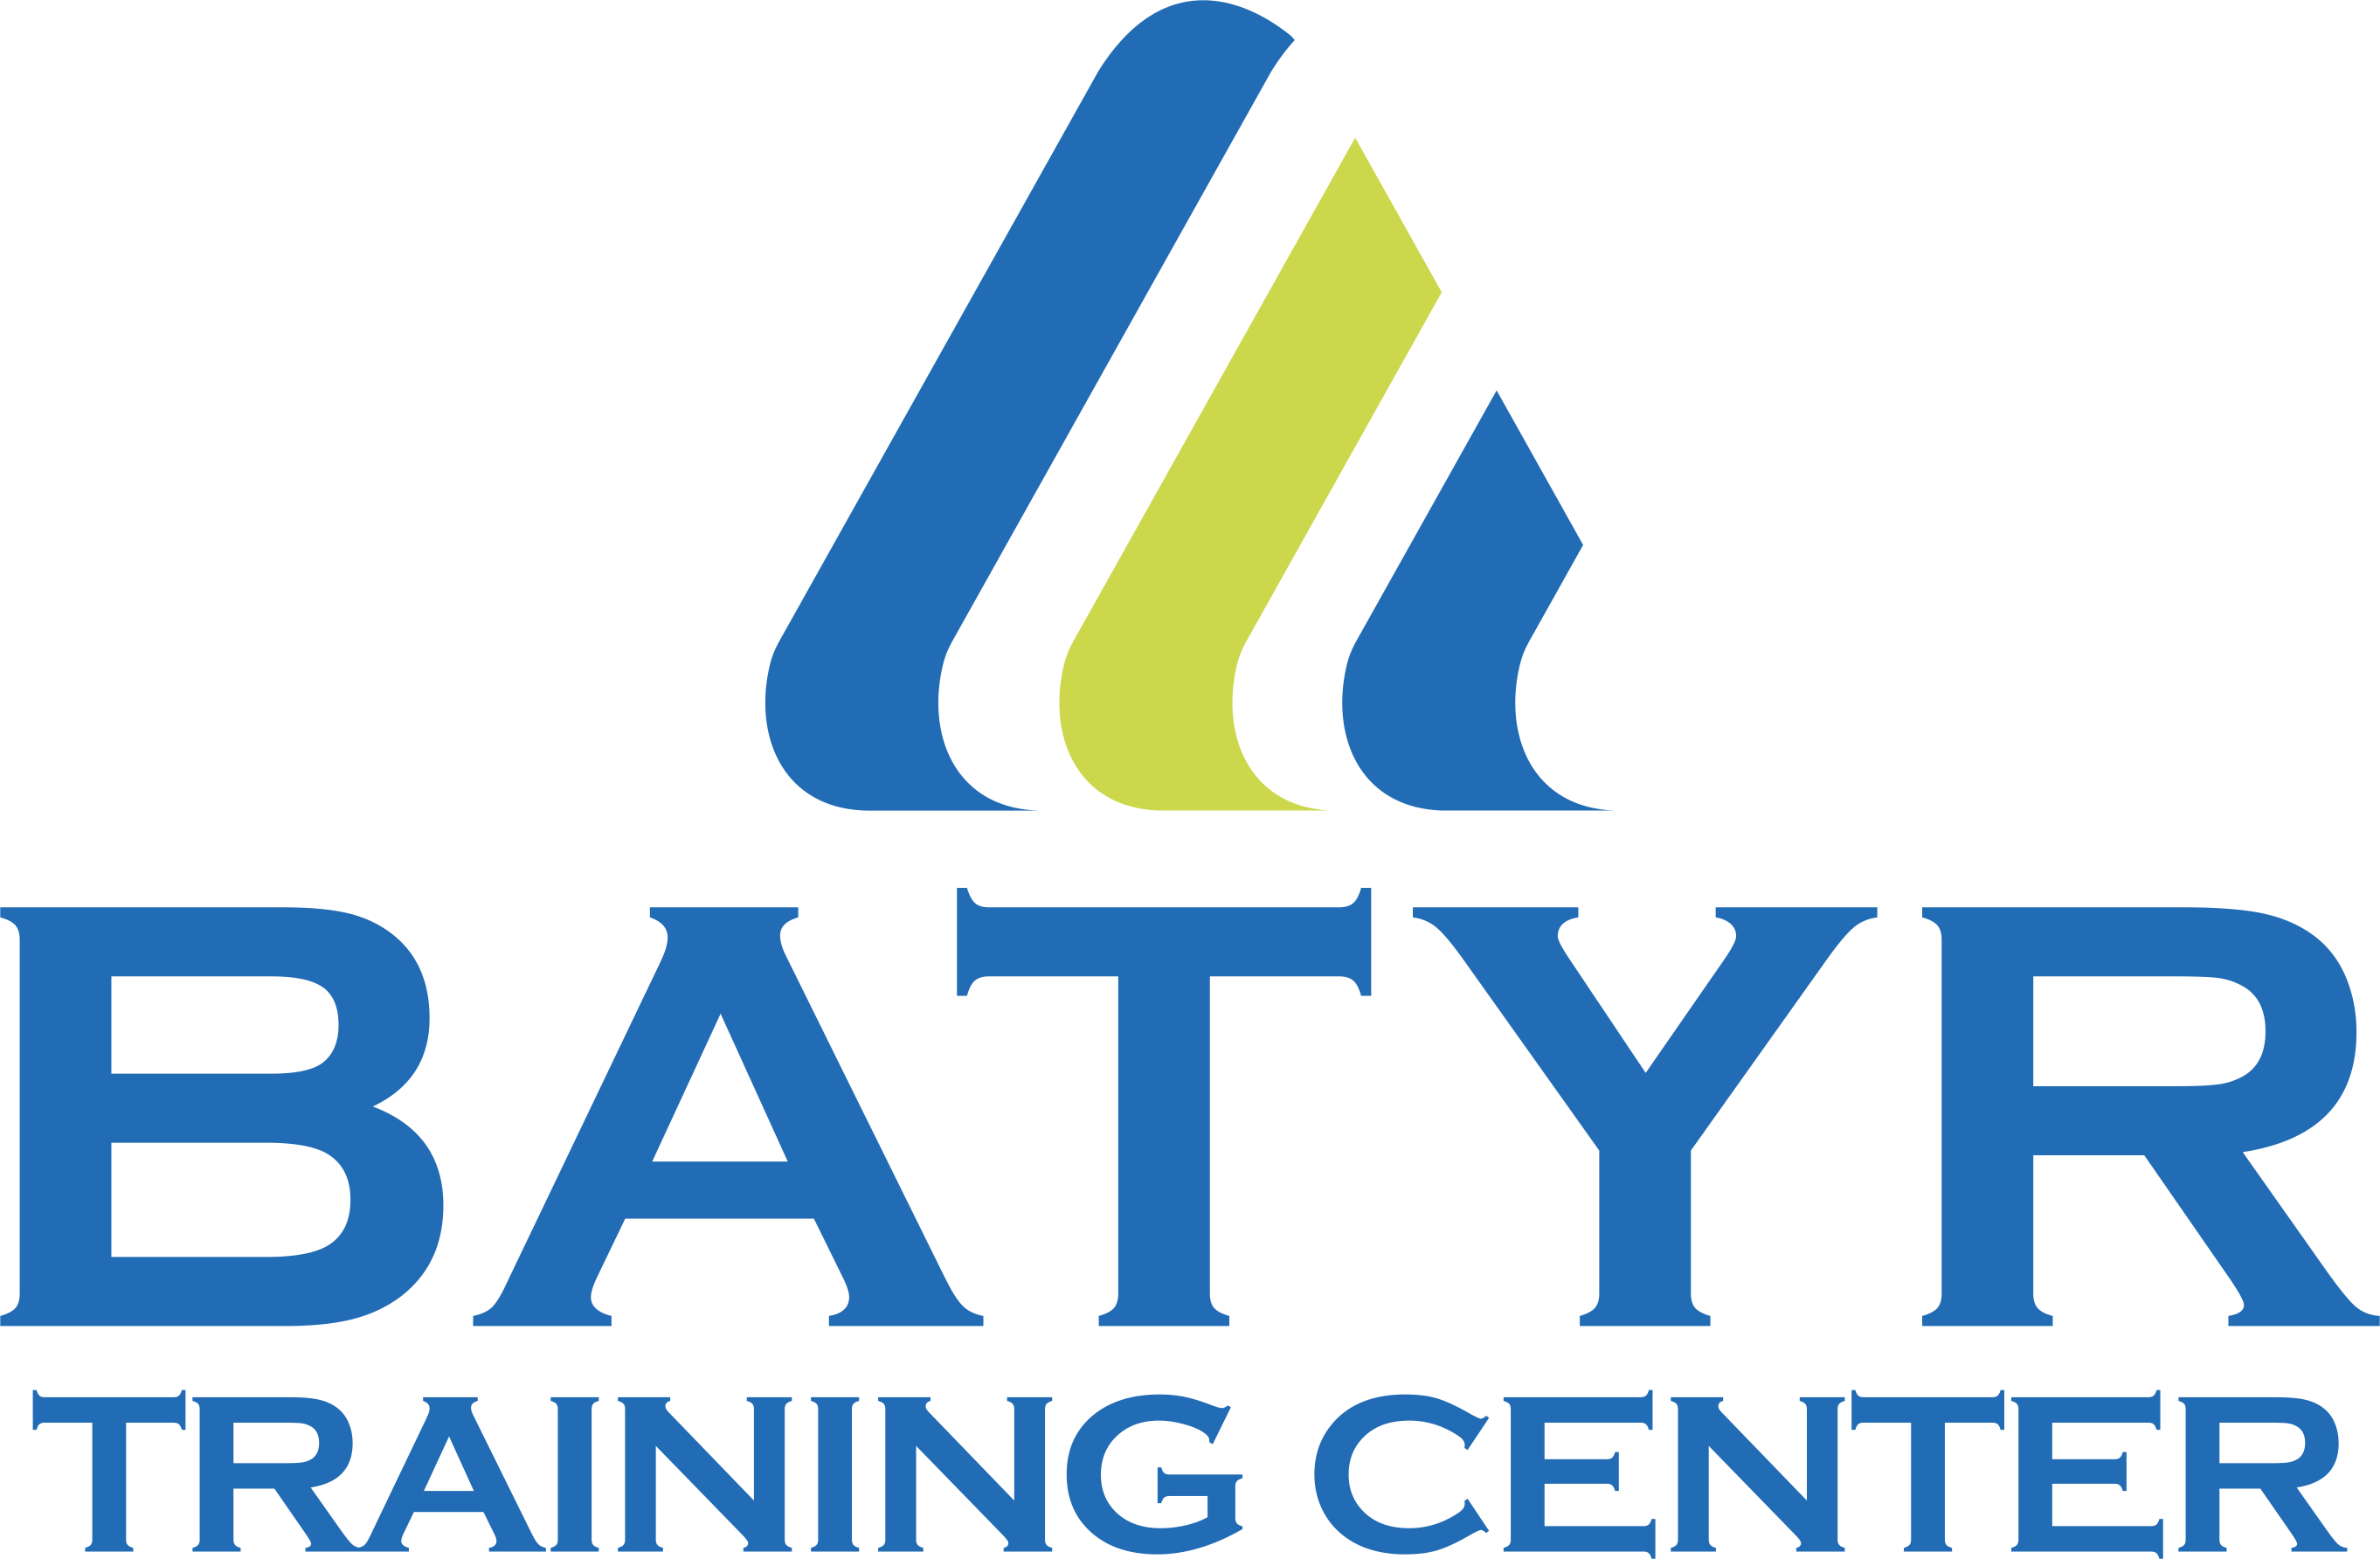 BATYR Training Center